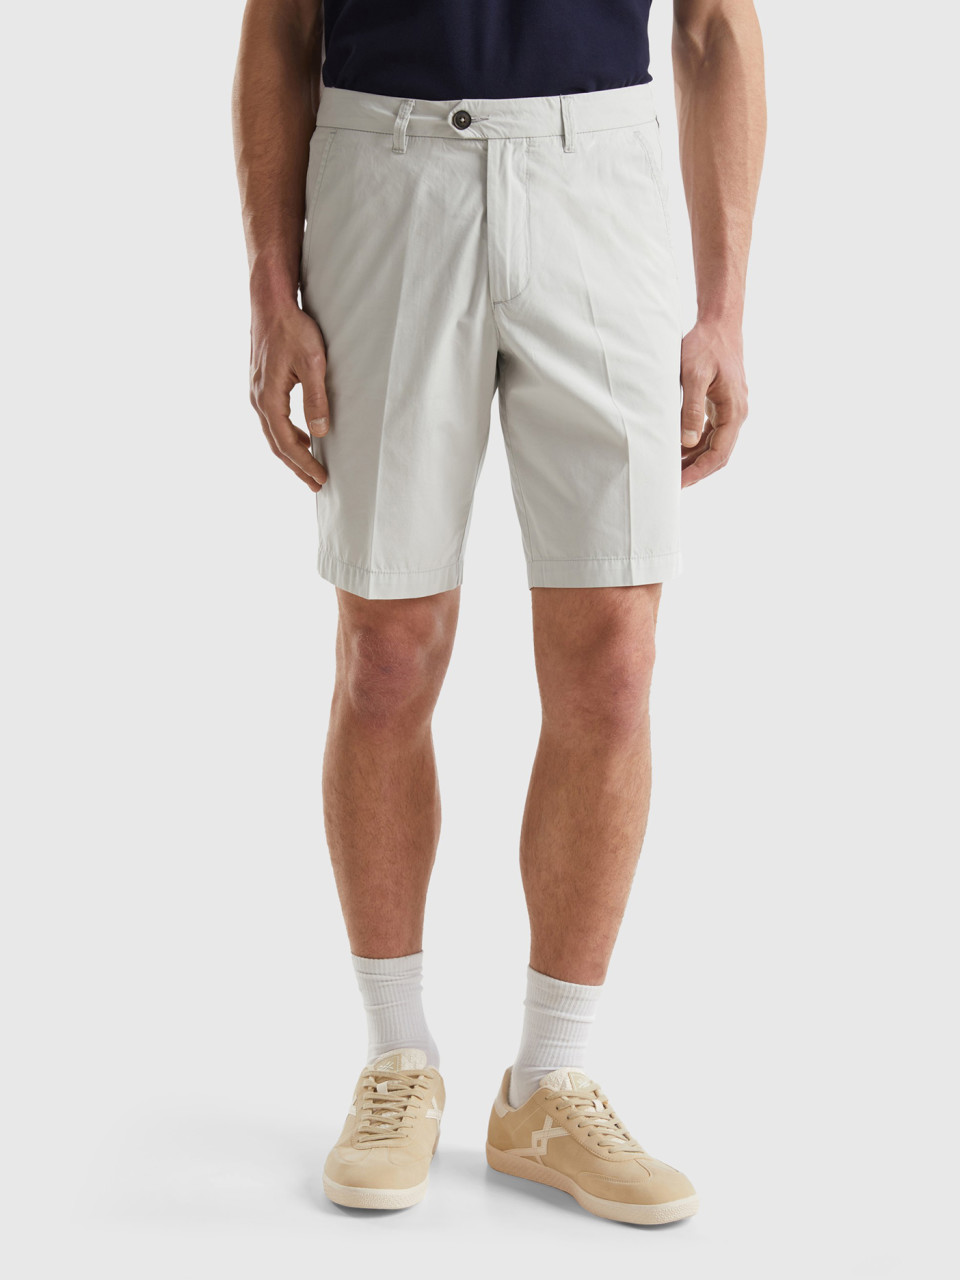 Benetton, Chino Bermuda Shorts In Canvas, Creamy White, Men